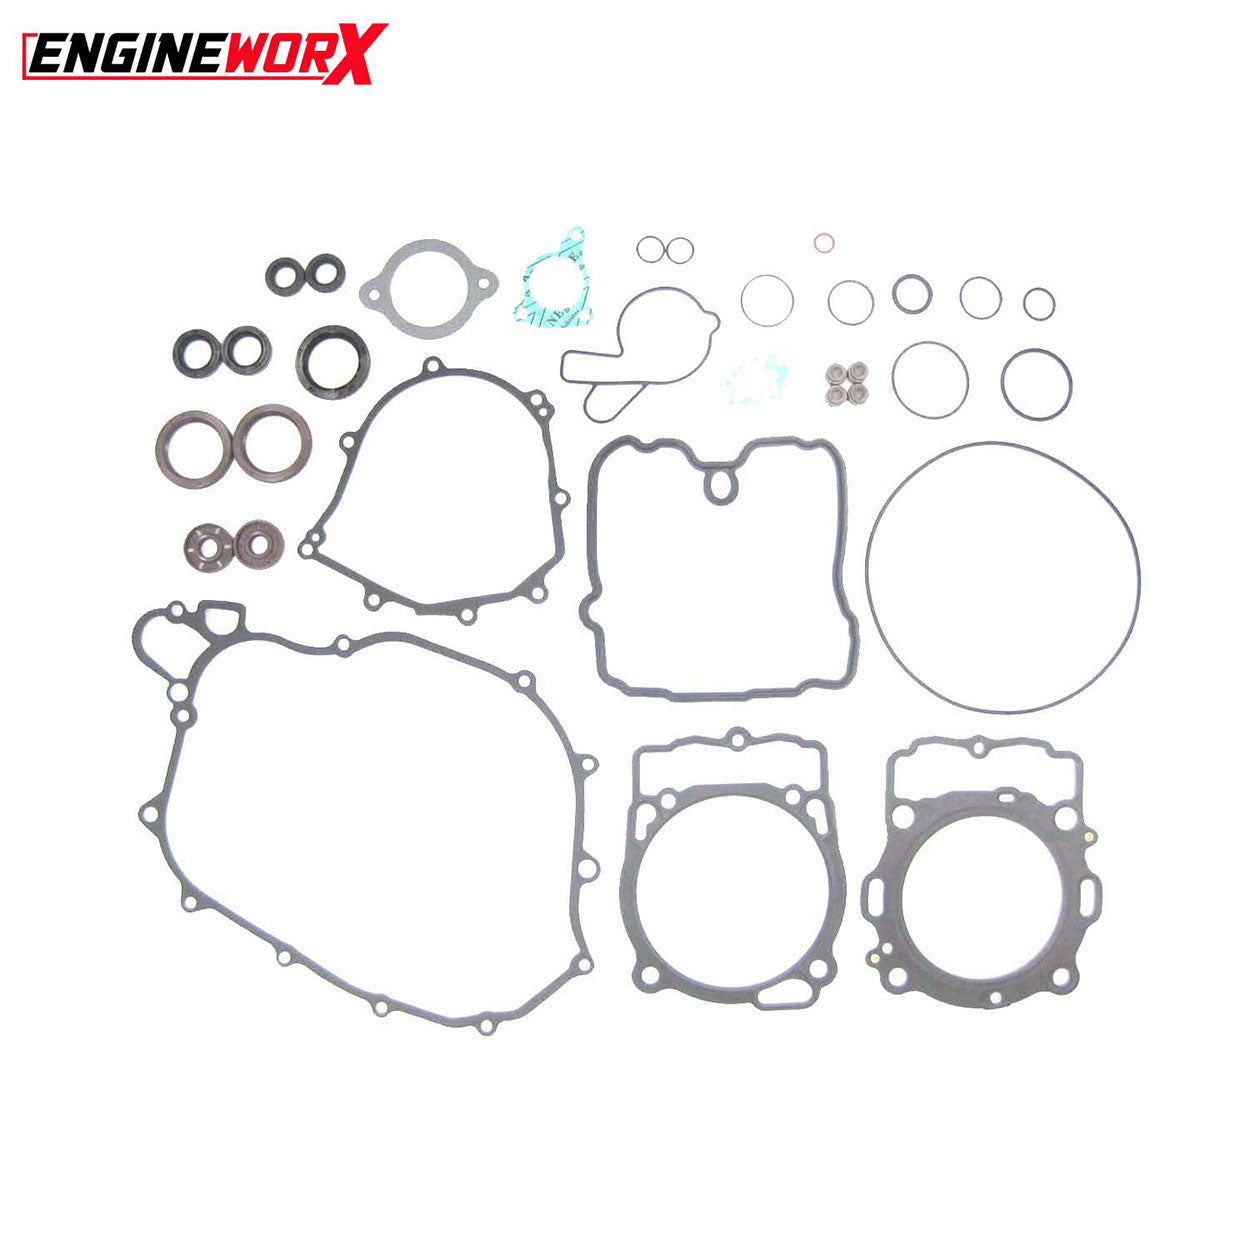 Engineworx Full Gasket Kit KTM SXF 450 13-15, XC-F450 14-16